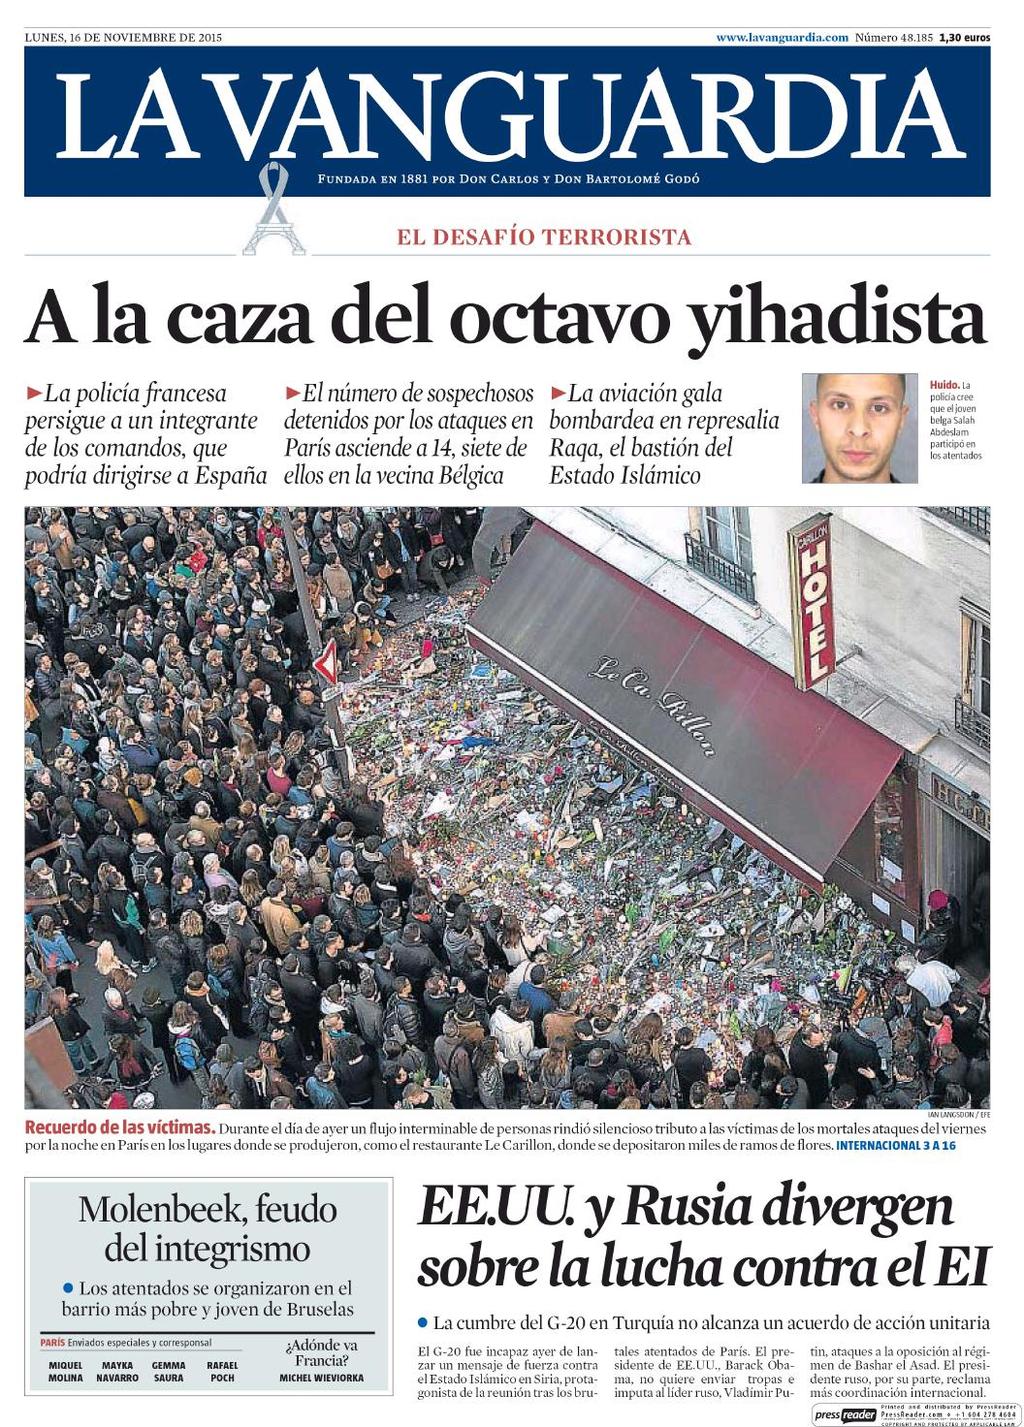 16/11/2015 Kiosko y Más La Vanguardia 16 nov. 2015 Page #1 http://lector.kioskoymas.